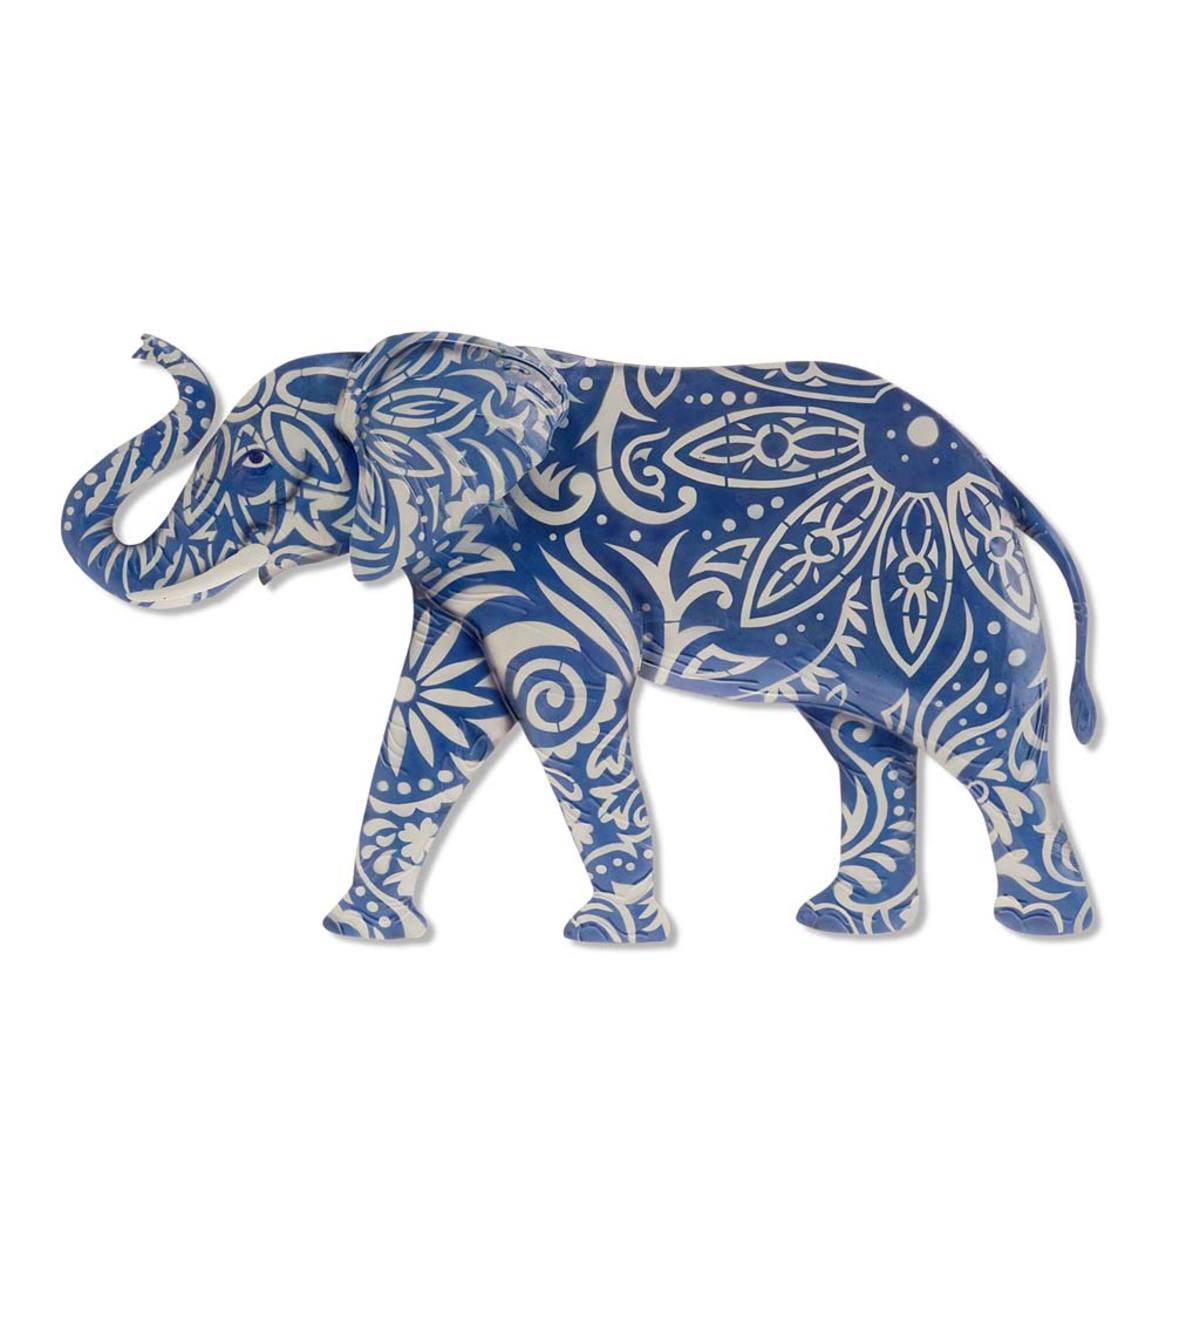 Handcrafted Metal and Capiz Elephant Wall Art